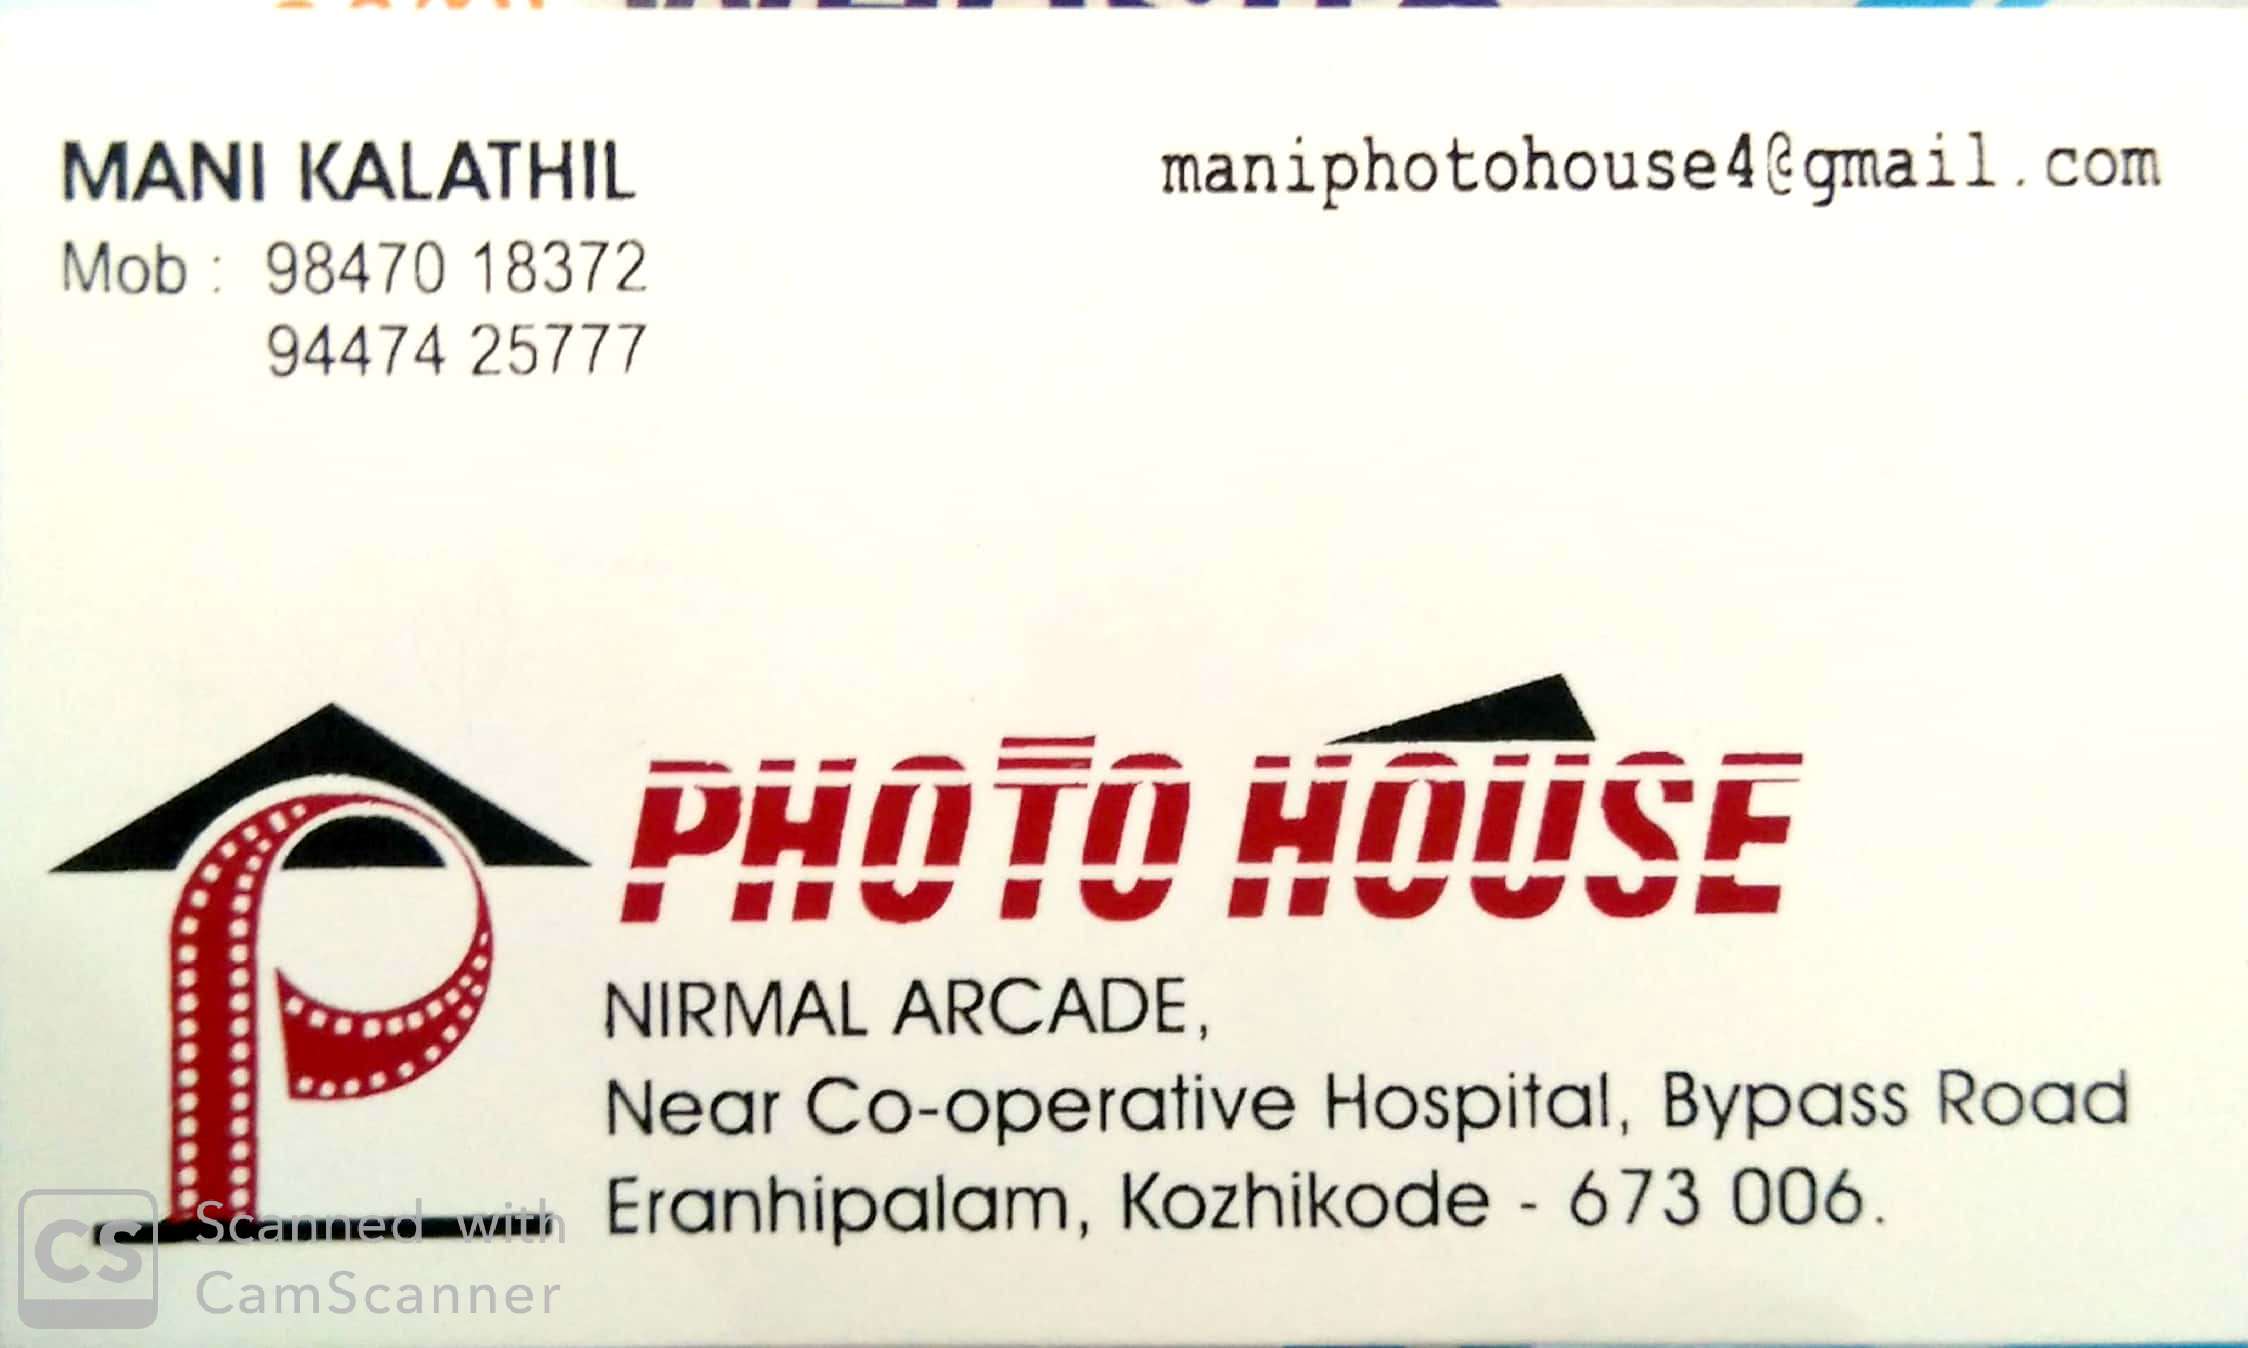 PHOTO HOUSE, STUDIO & VIDEO EDITING,  service in Eranhipalam, Kozhikode